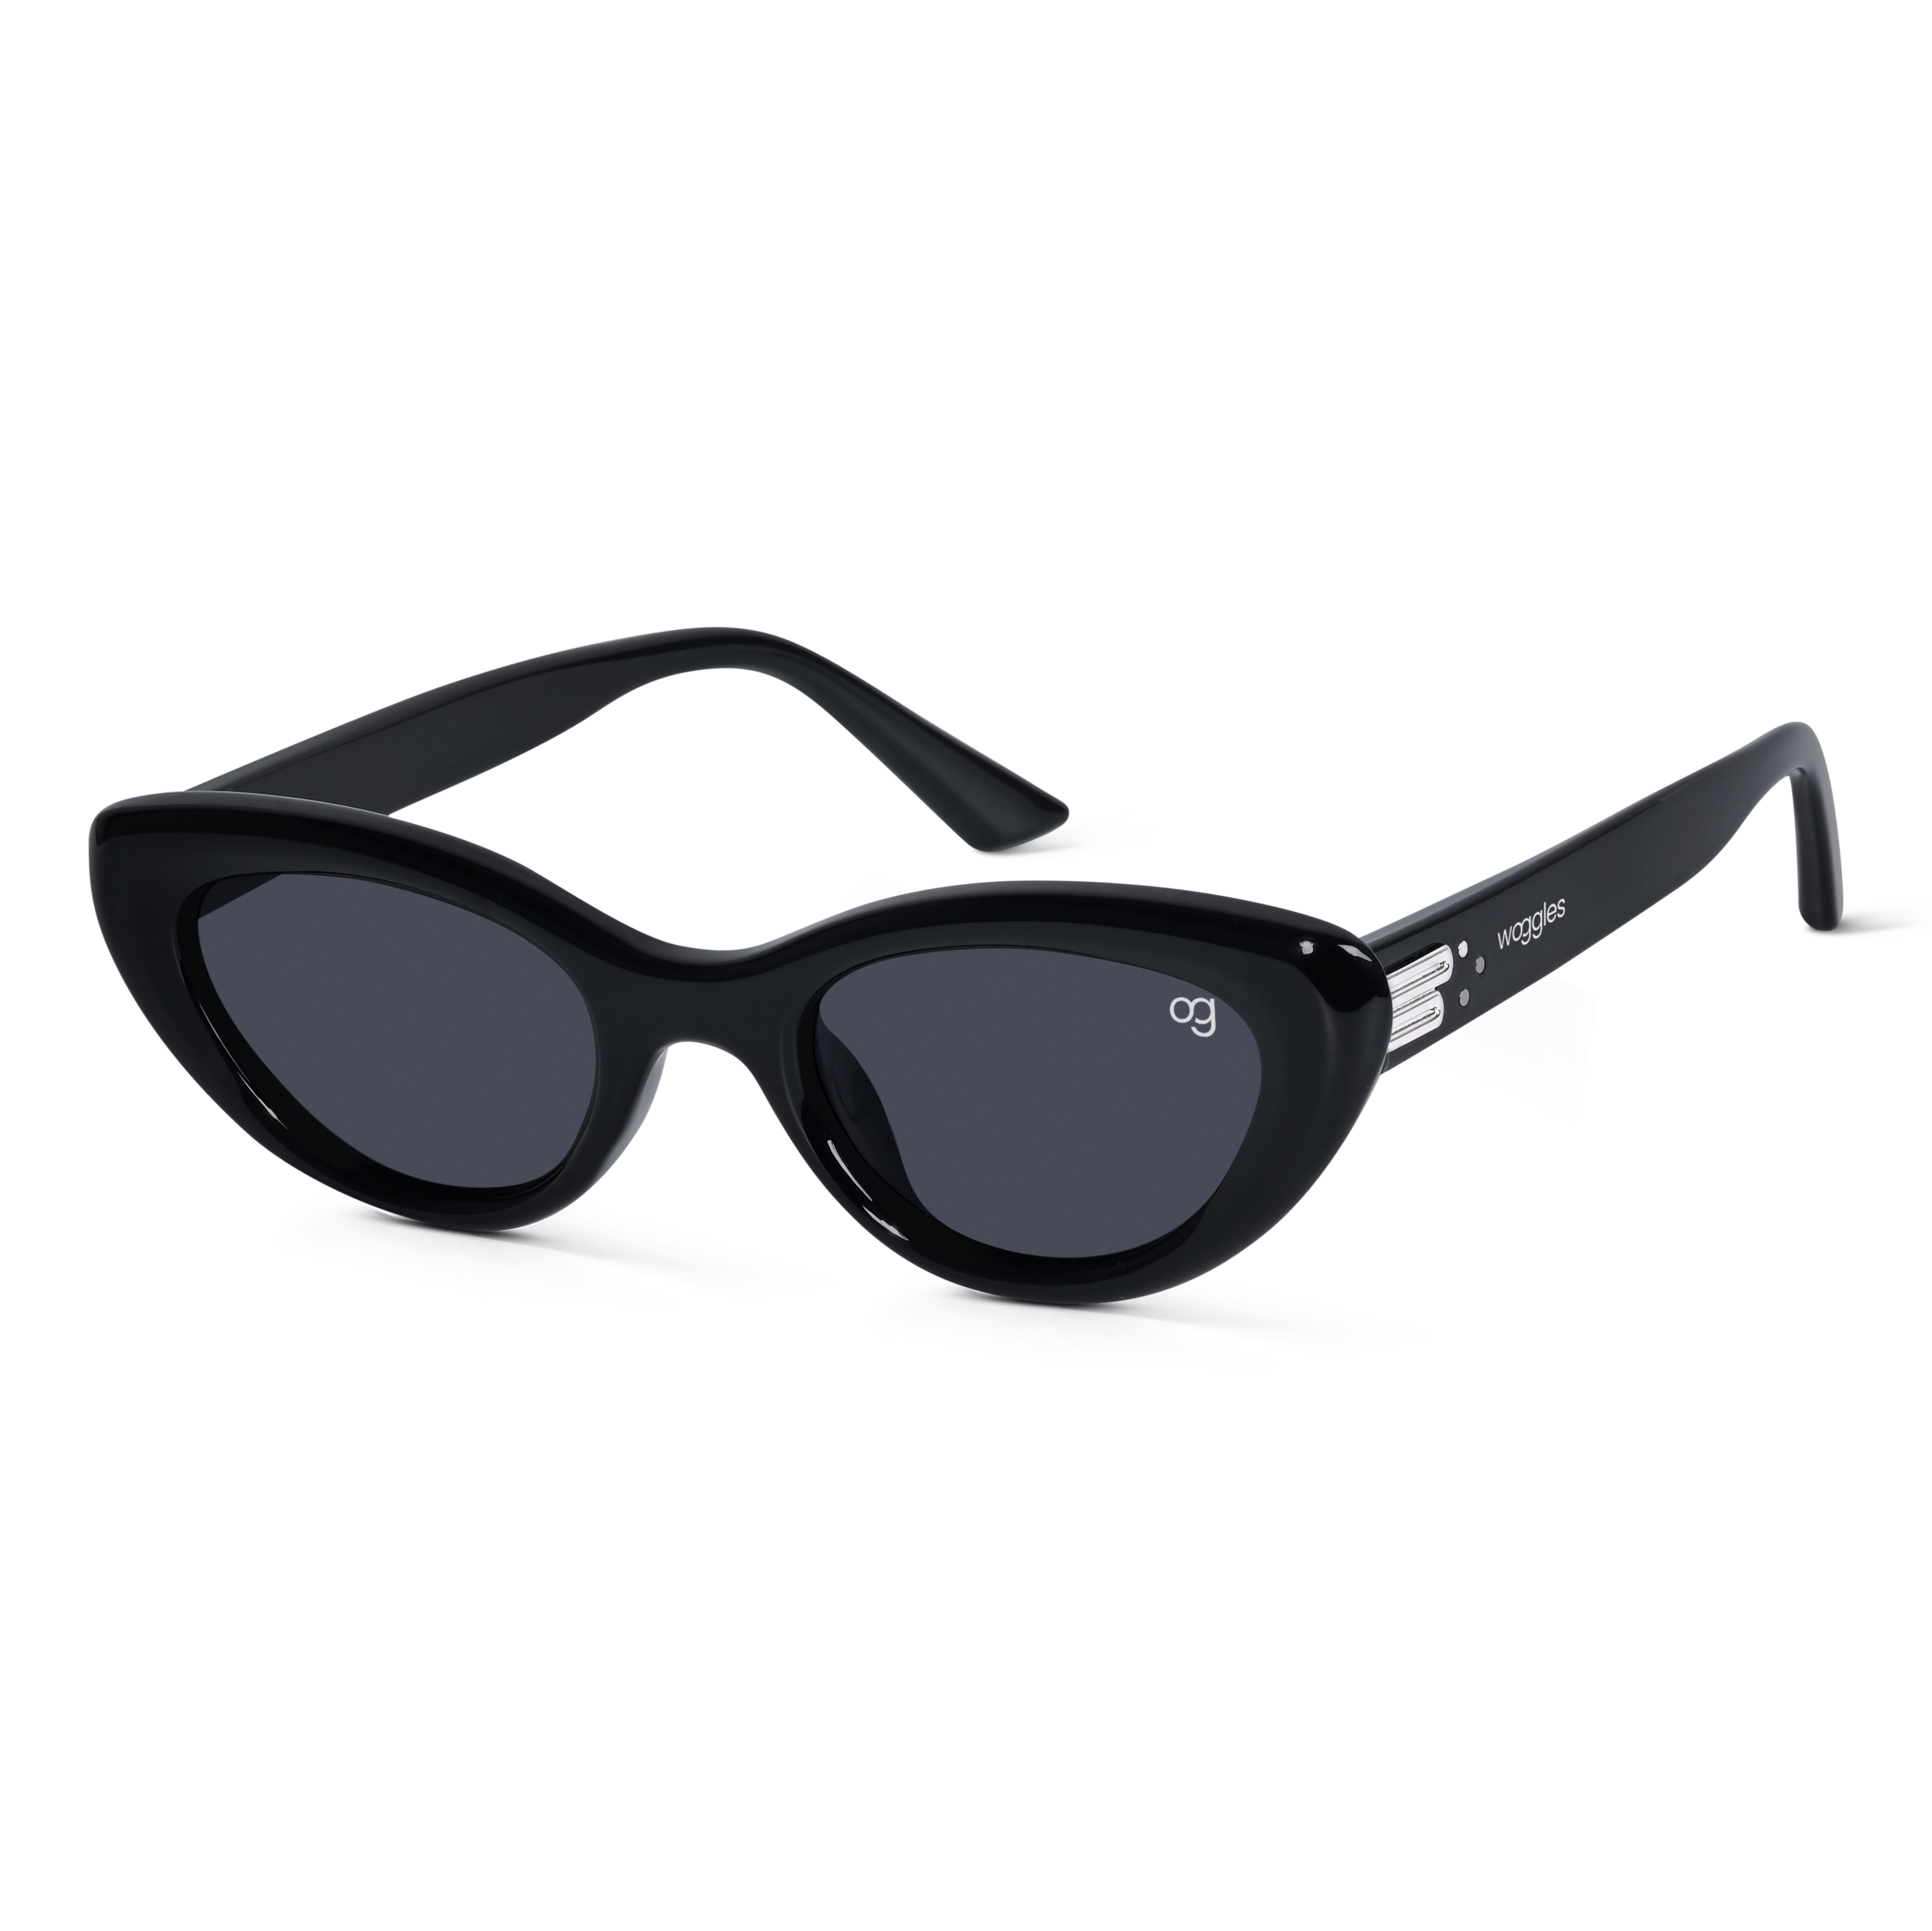 Hue Black Polarized Cateye Sunglasses